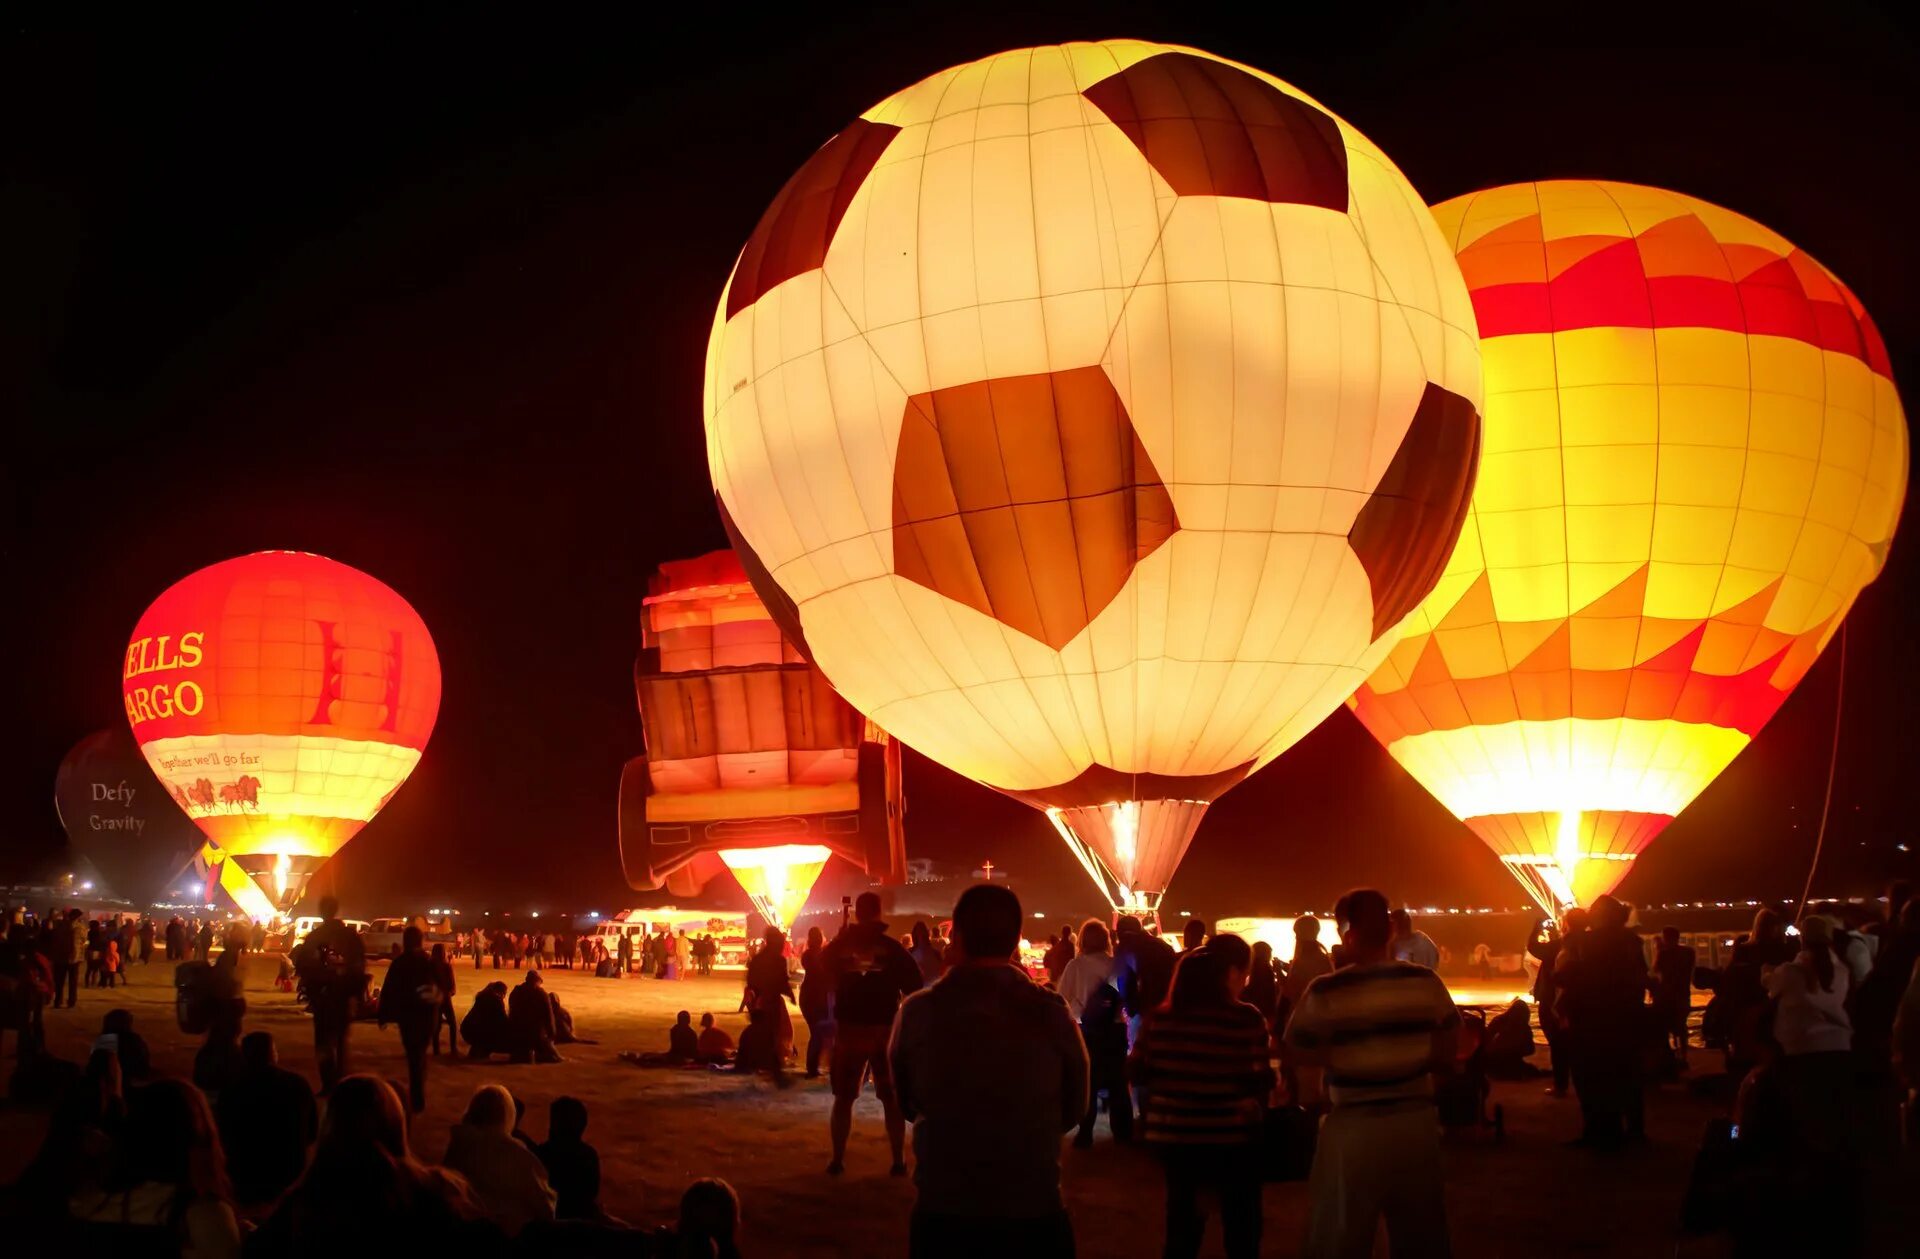 Гонки на воздушном шаре. The great Reno Balloon Race Невада. Фестиваль воздушных шаров. Фестиваль воздушных шаров в Канаде. Воздушный шар Канада.